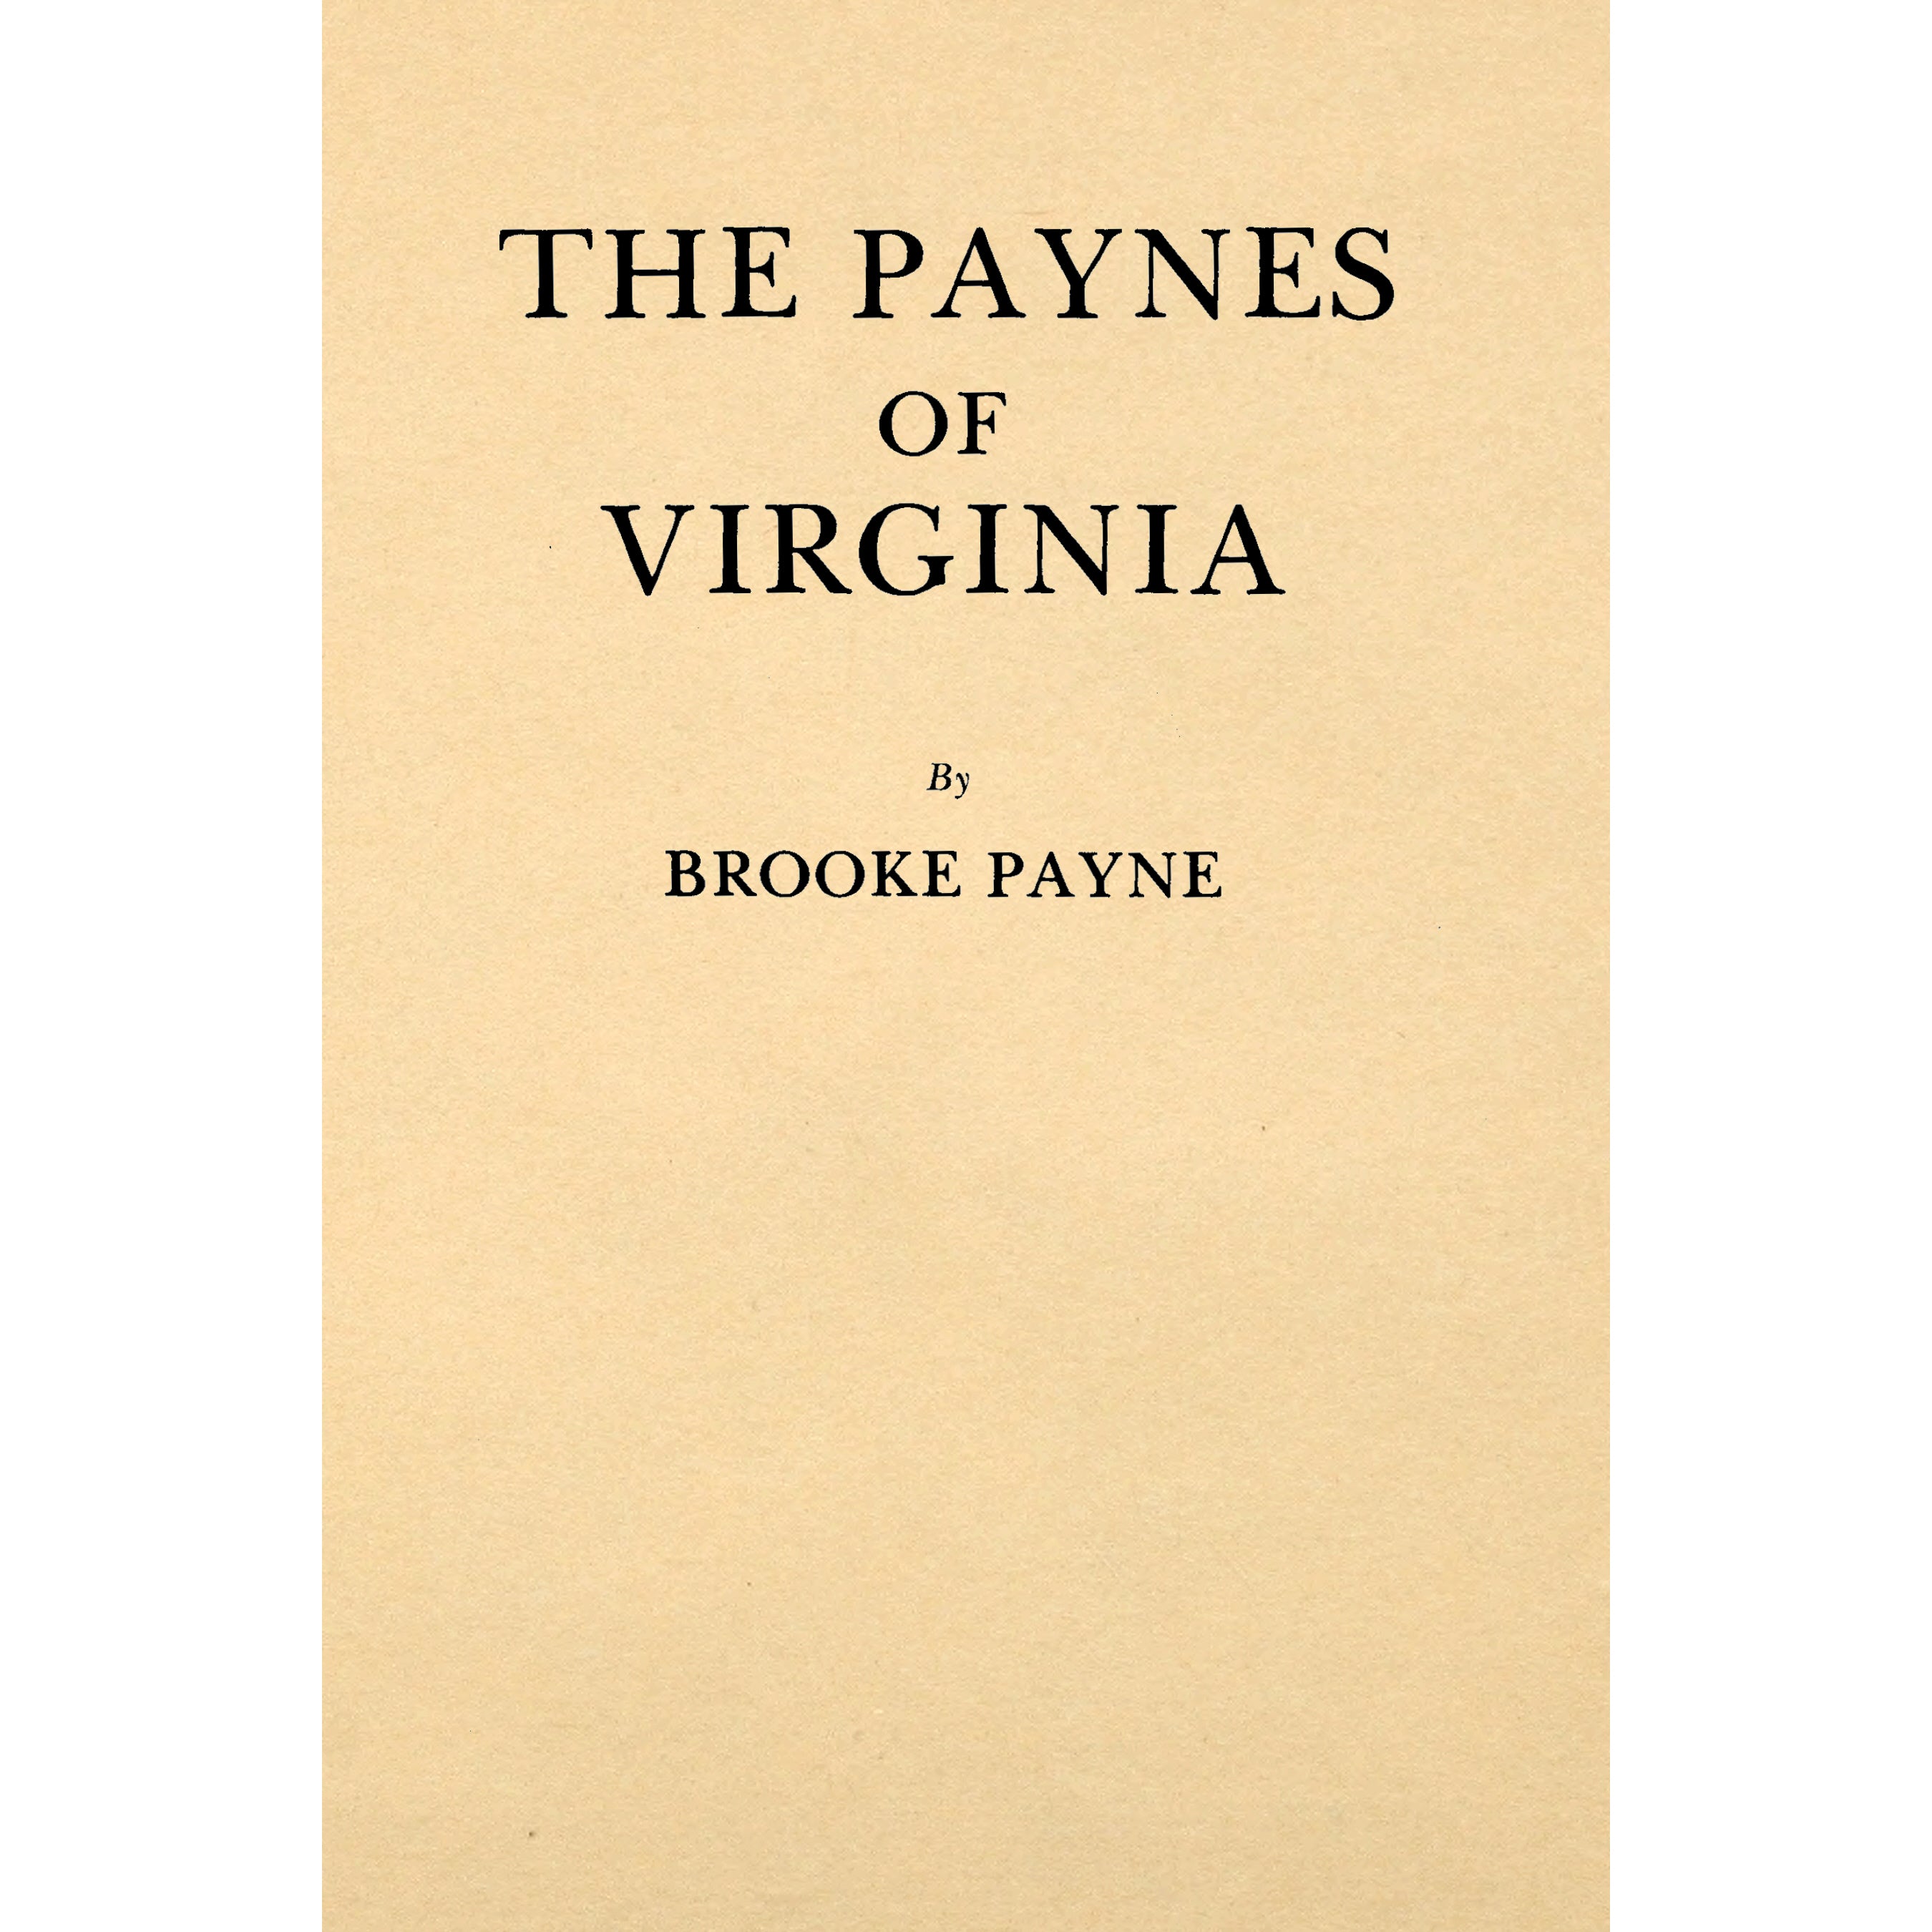 The Paynes of Virginia